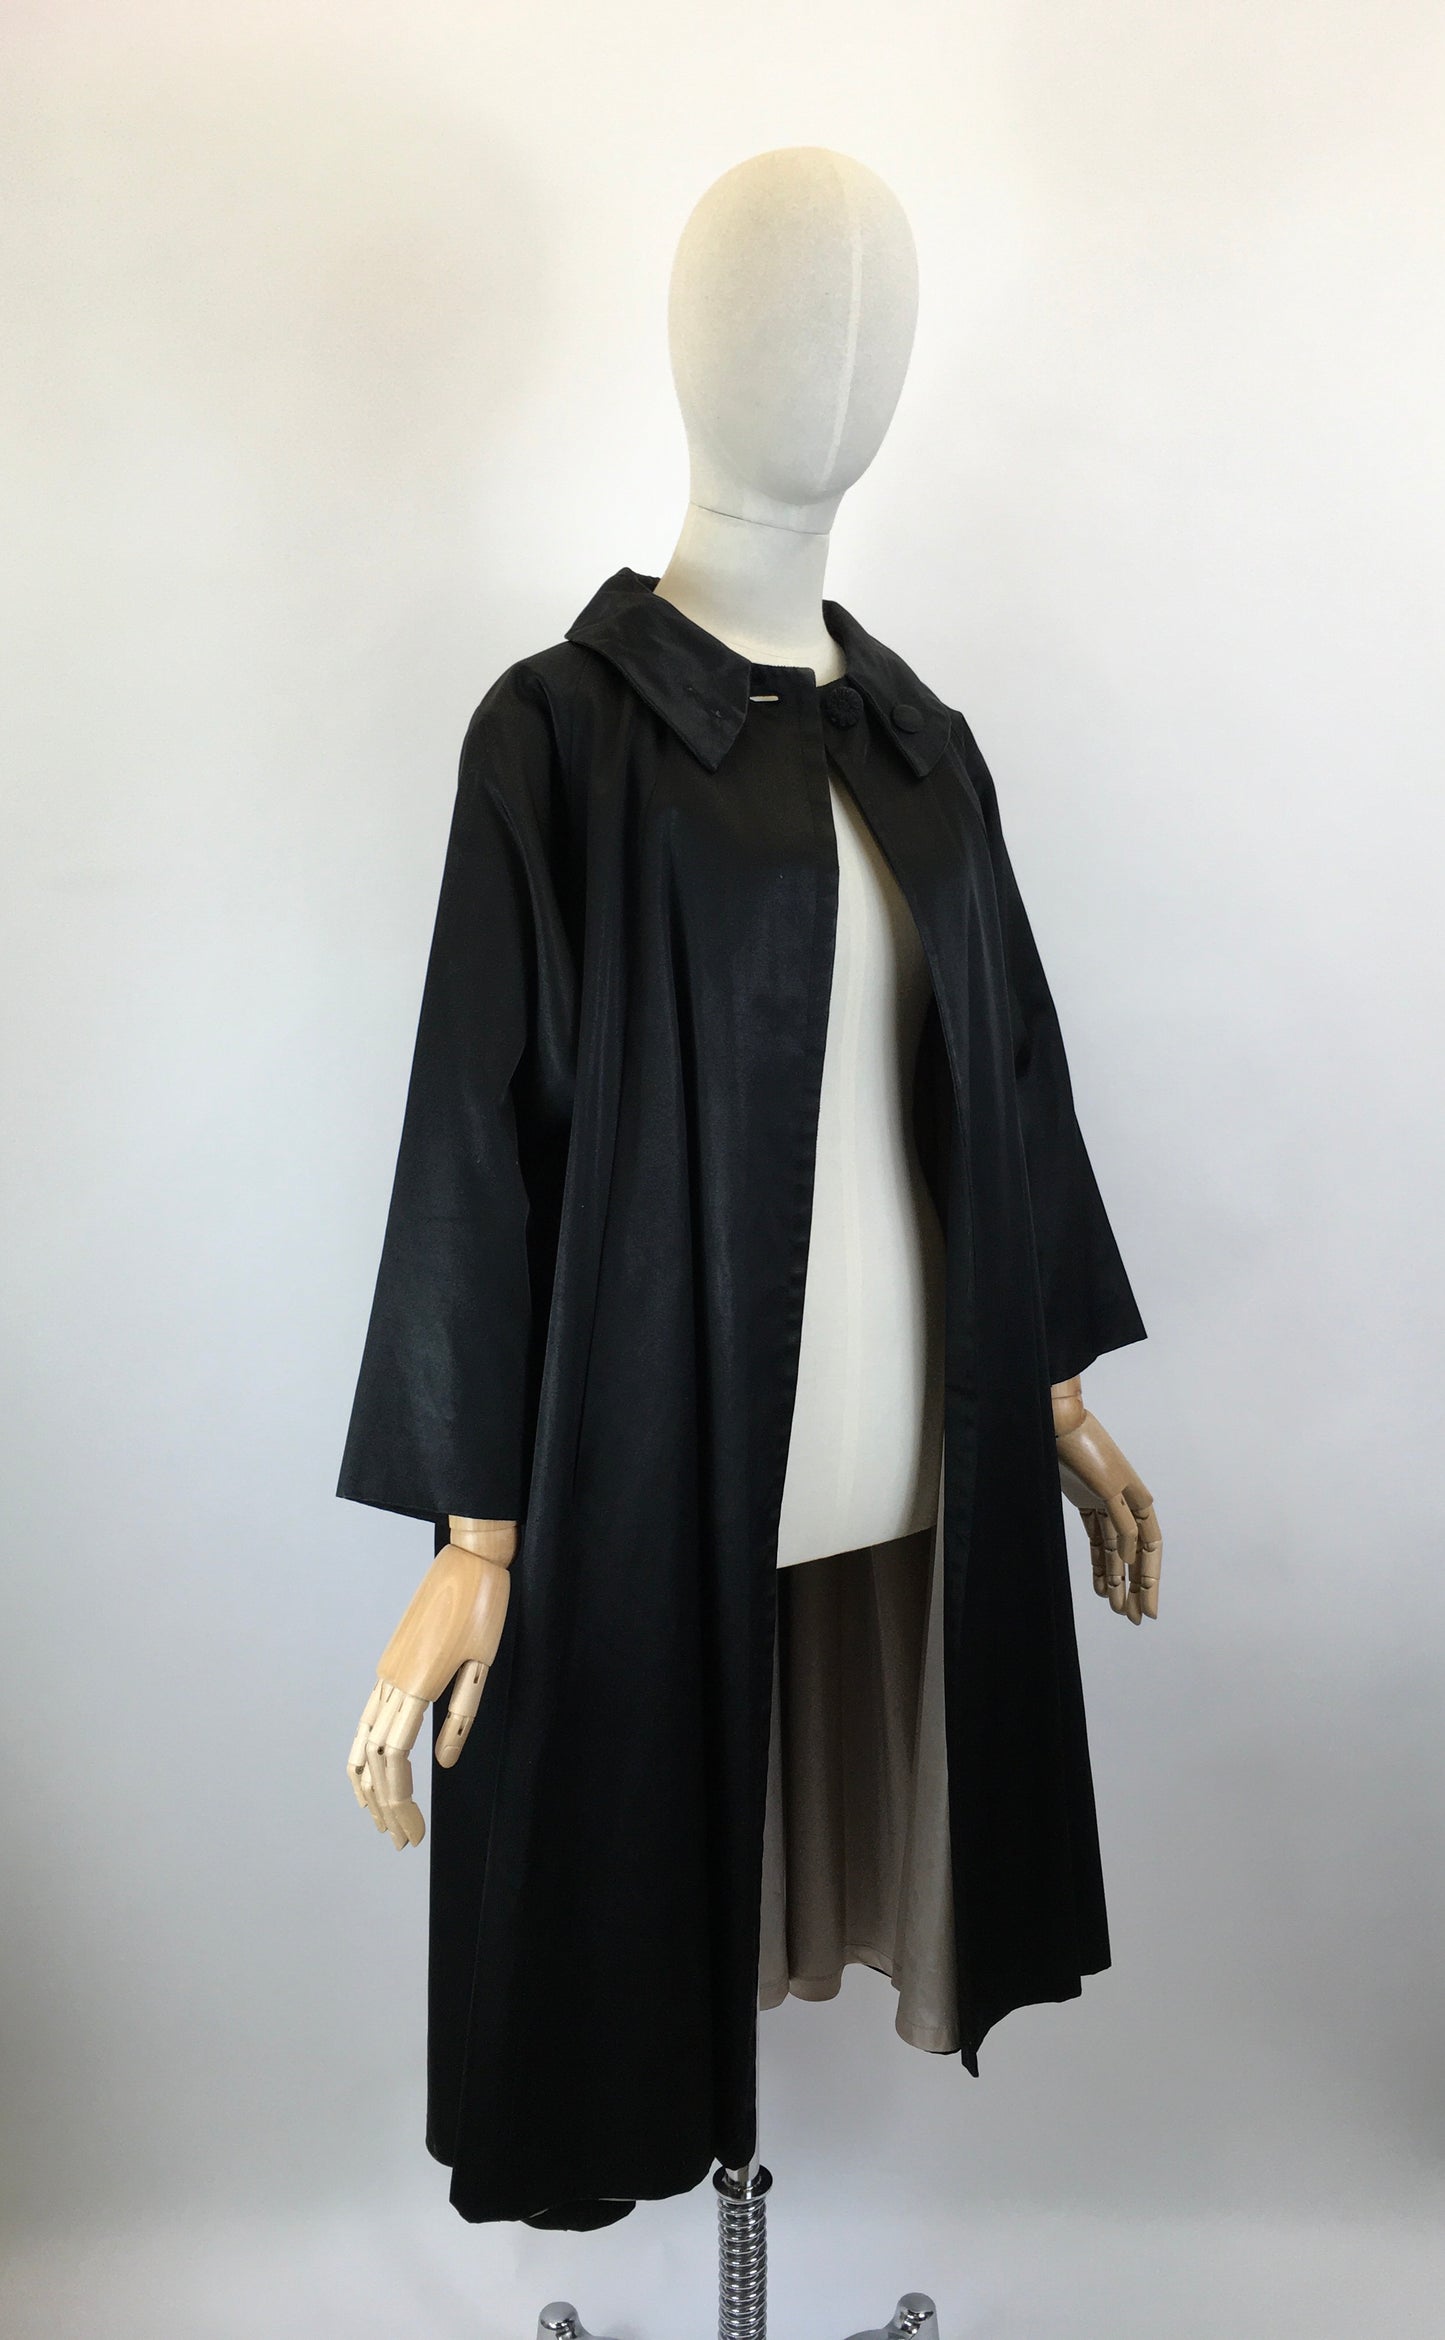 Original 1950’s Stunning Black Evening Coat - In A Lush Noir Sateen